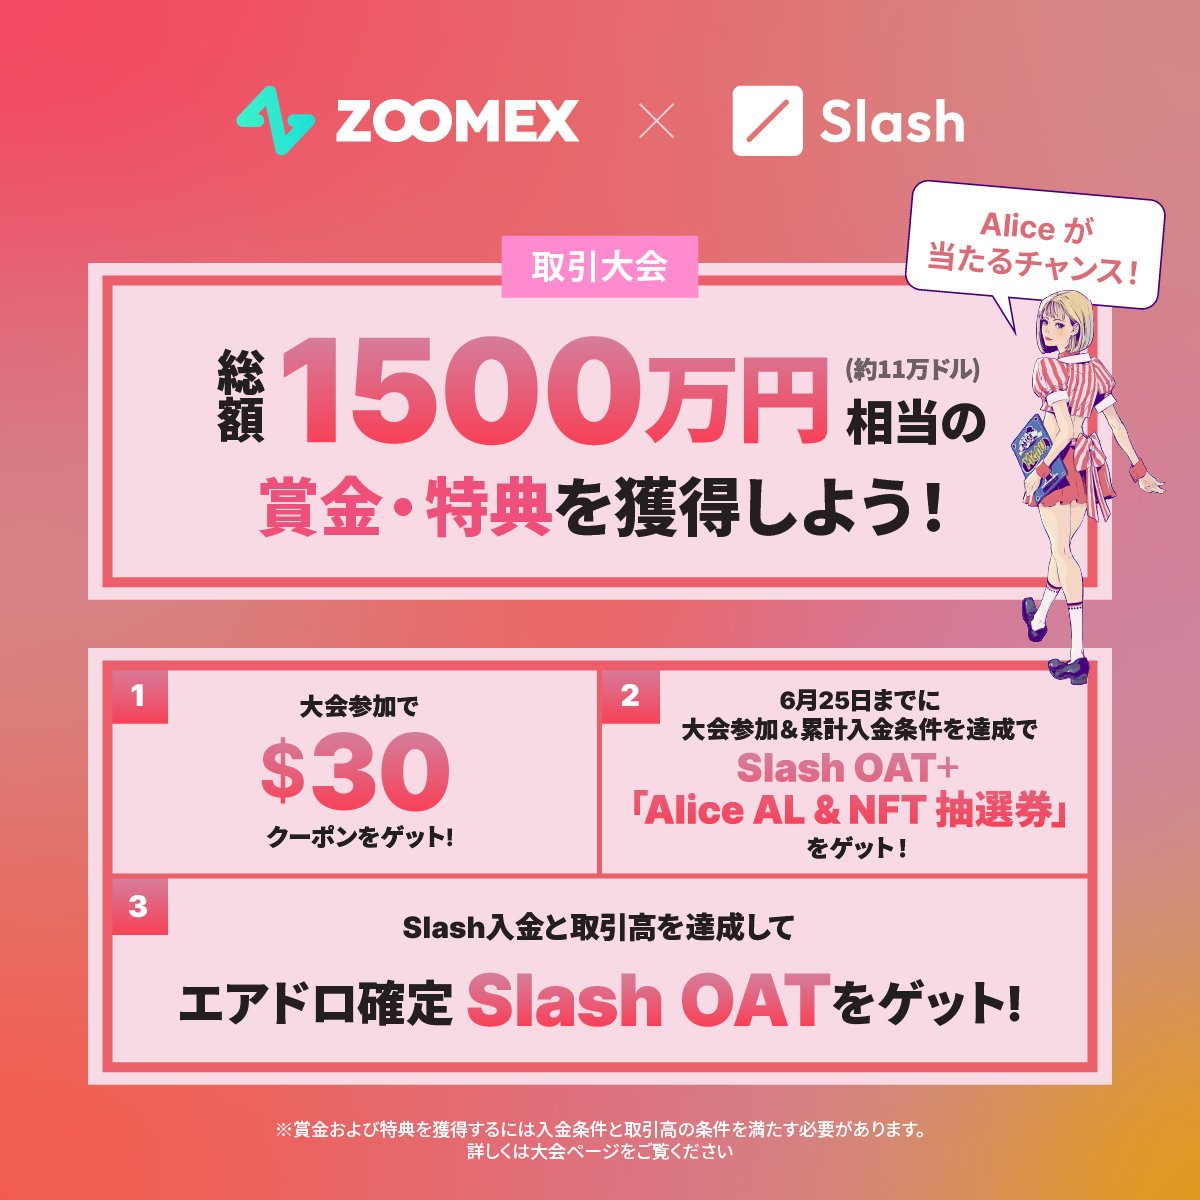 Zoomex Slash campaign